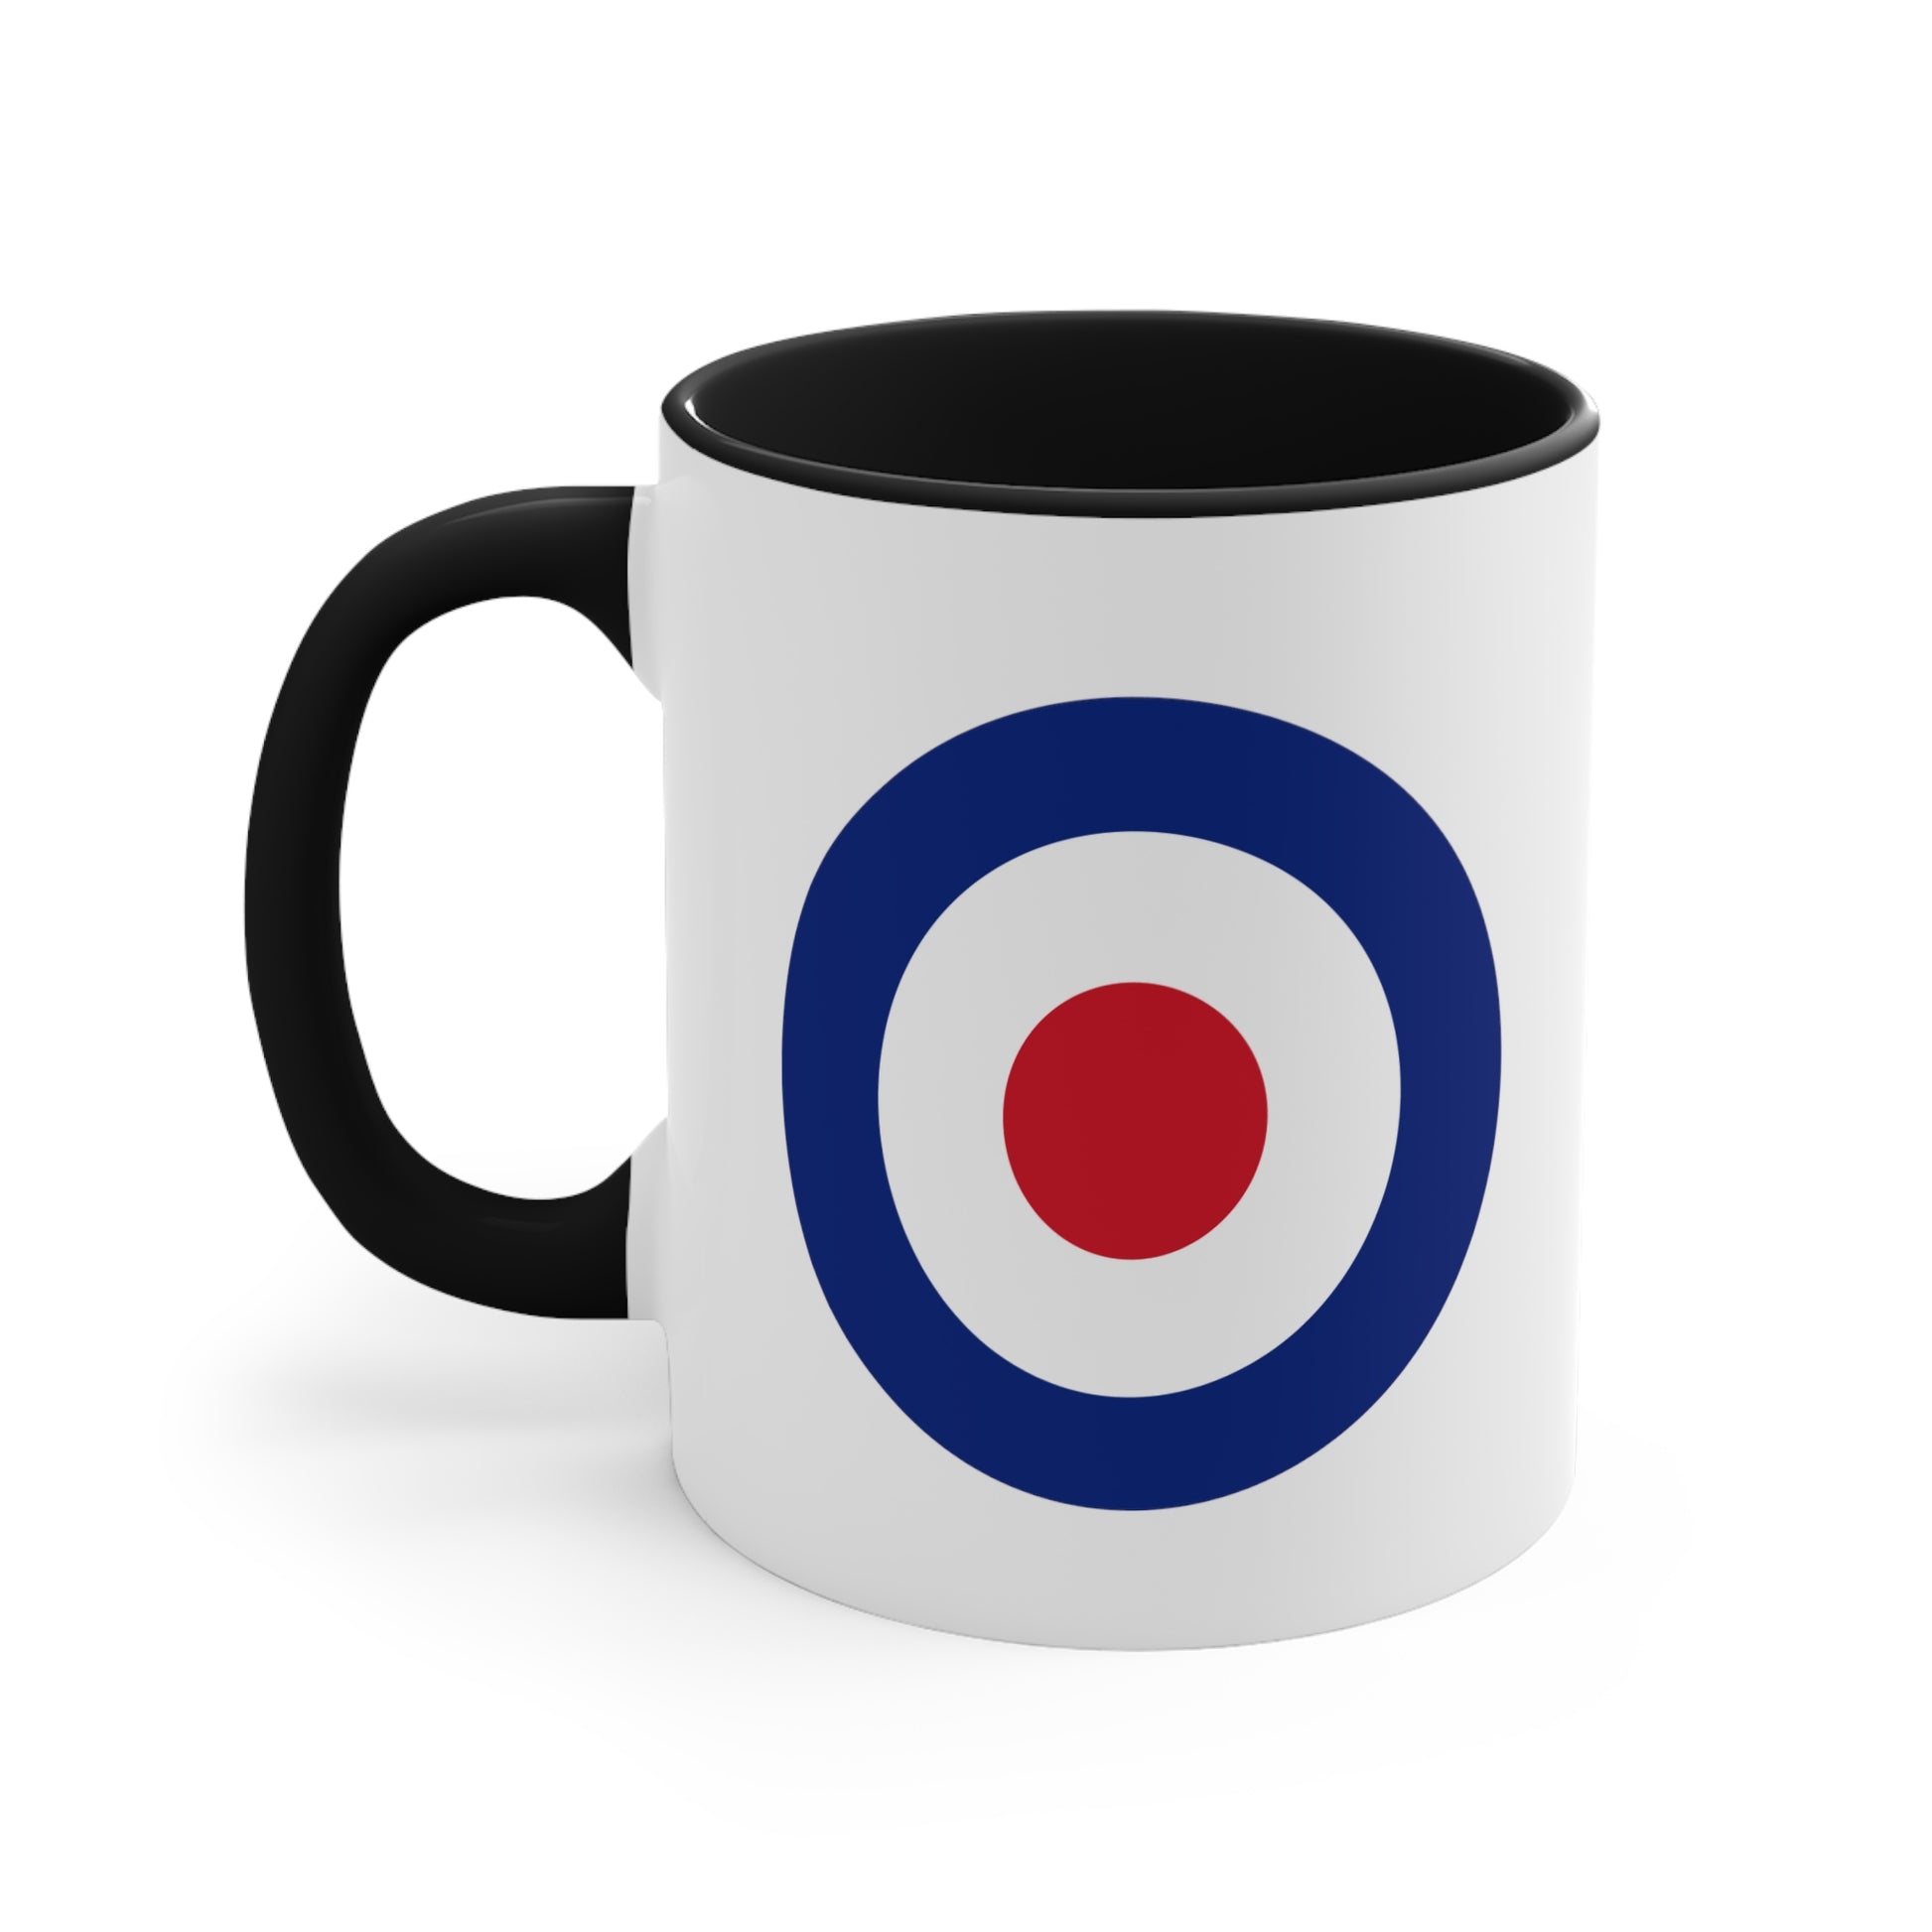 RAF Royal Air Force Roundel Coffee Mug - Double Sided Black Accent Ceramic 11oz - by TheGlassyLass.com